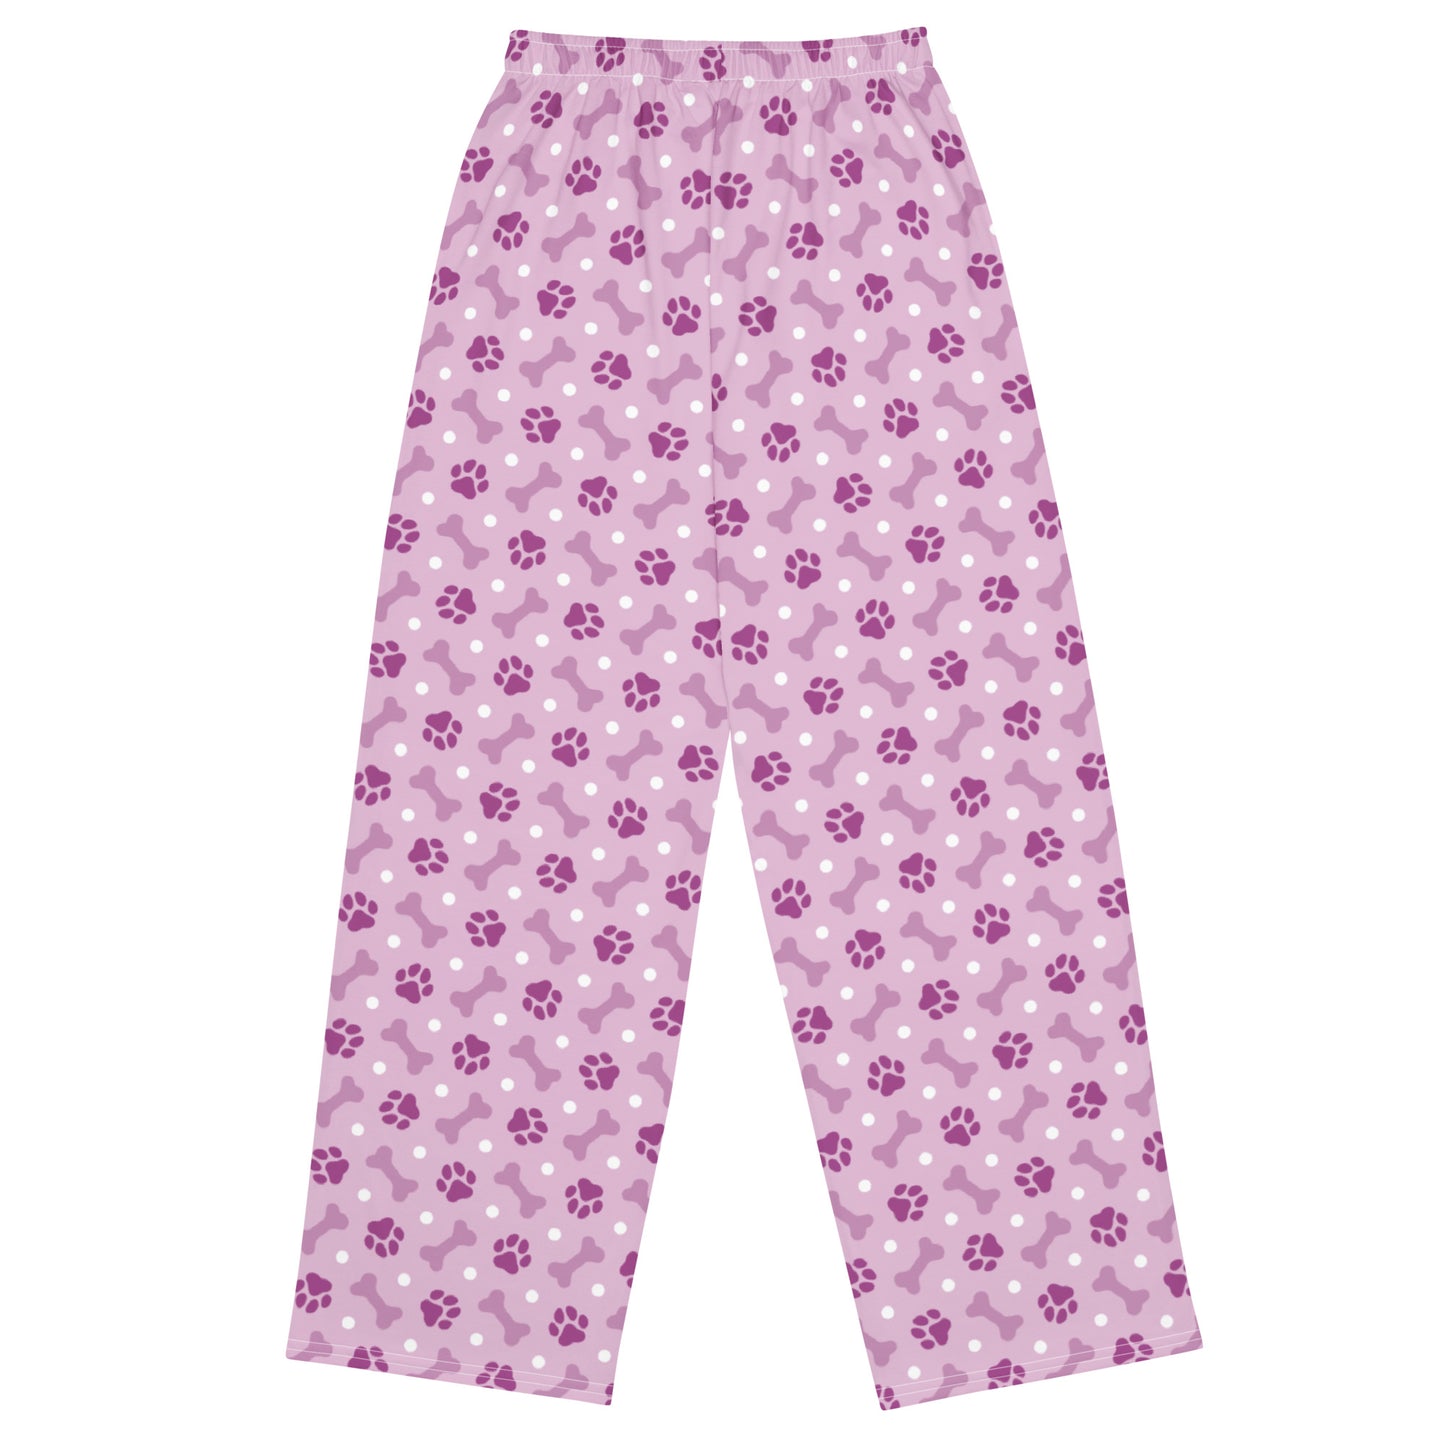 Paws & Bone Print Super Soft Wide-leg Pajama/Sweats Bottoms